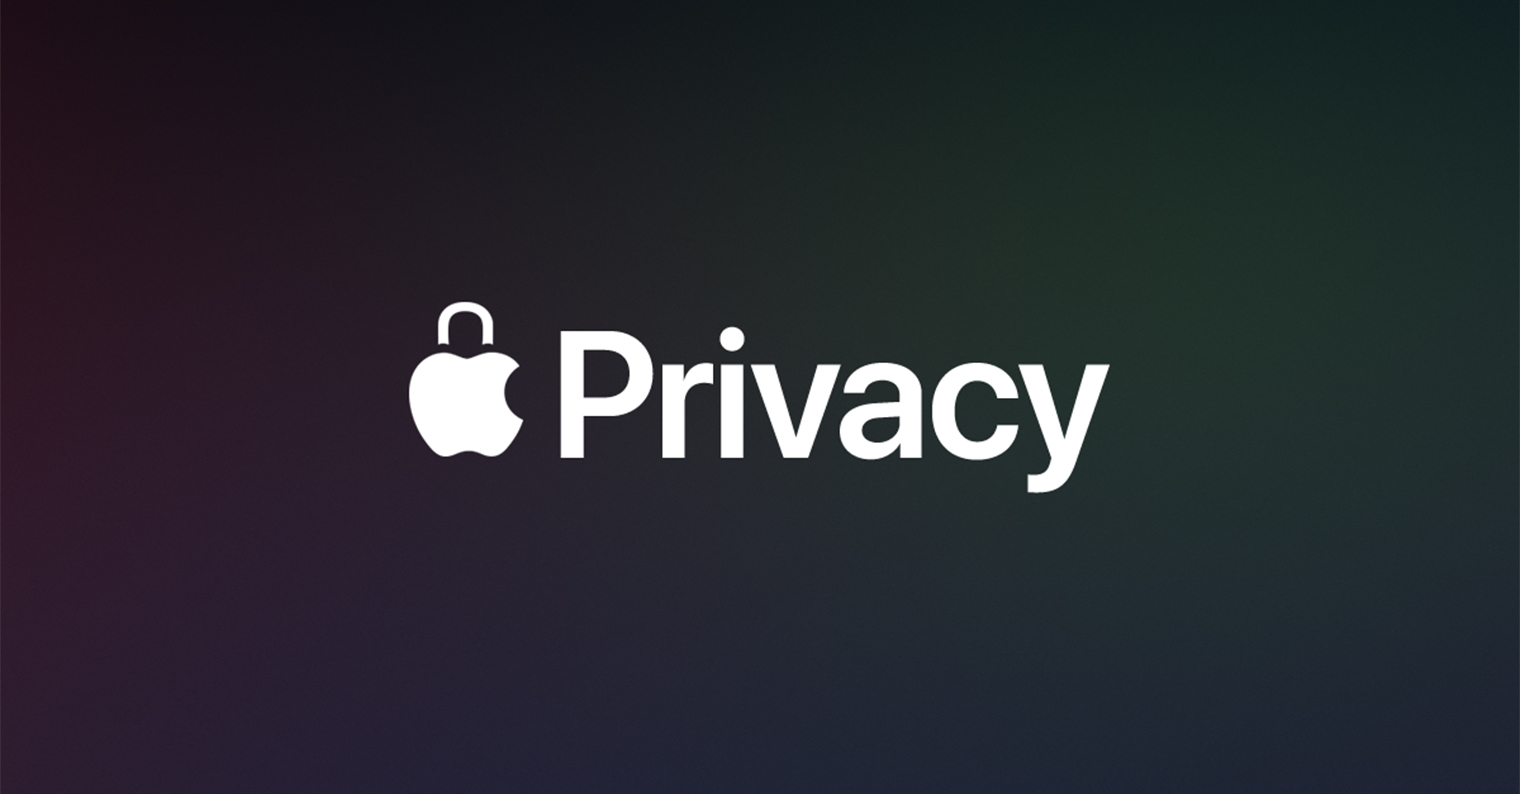 https://jablickar.cz/wp-content/uploads/2020/01/Apple-Privacy-FB.jpg